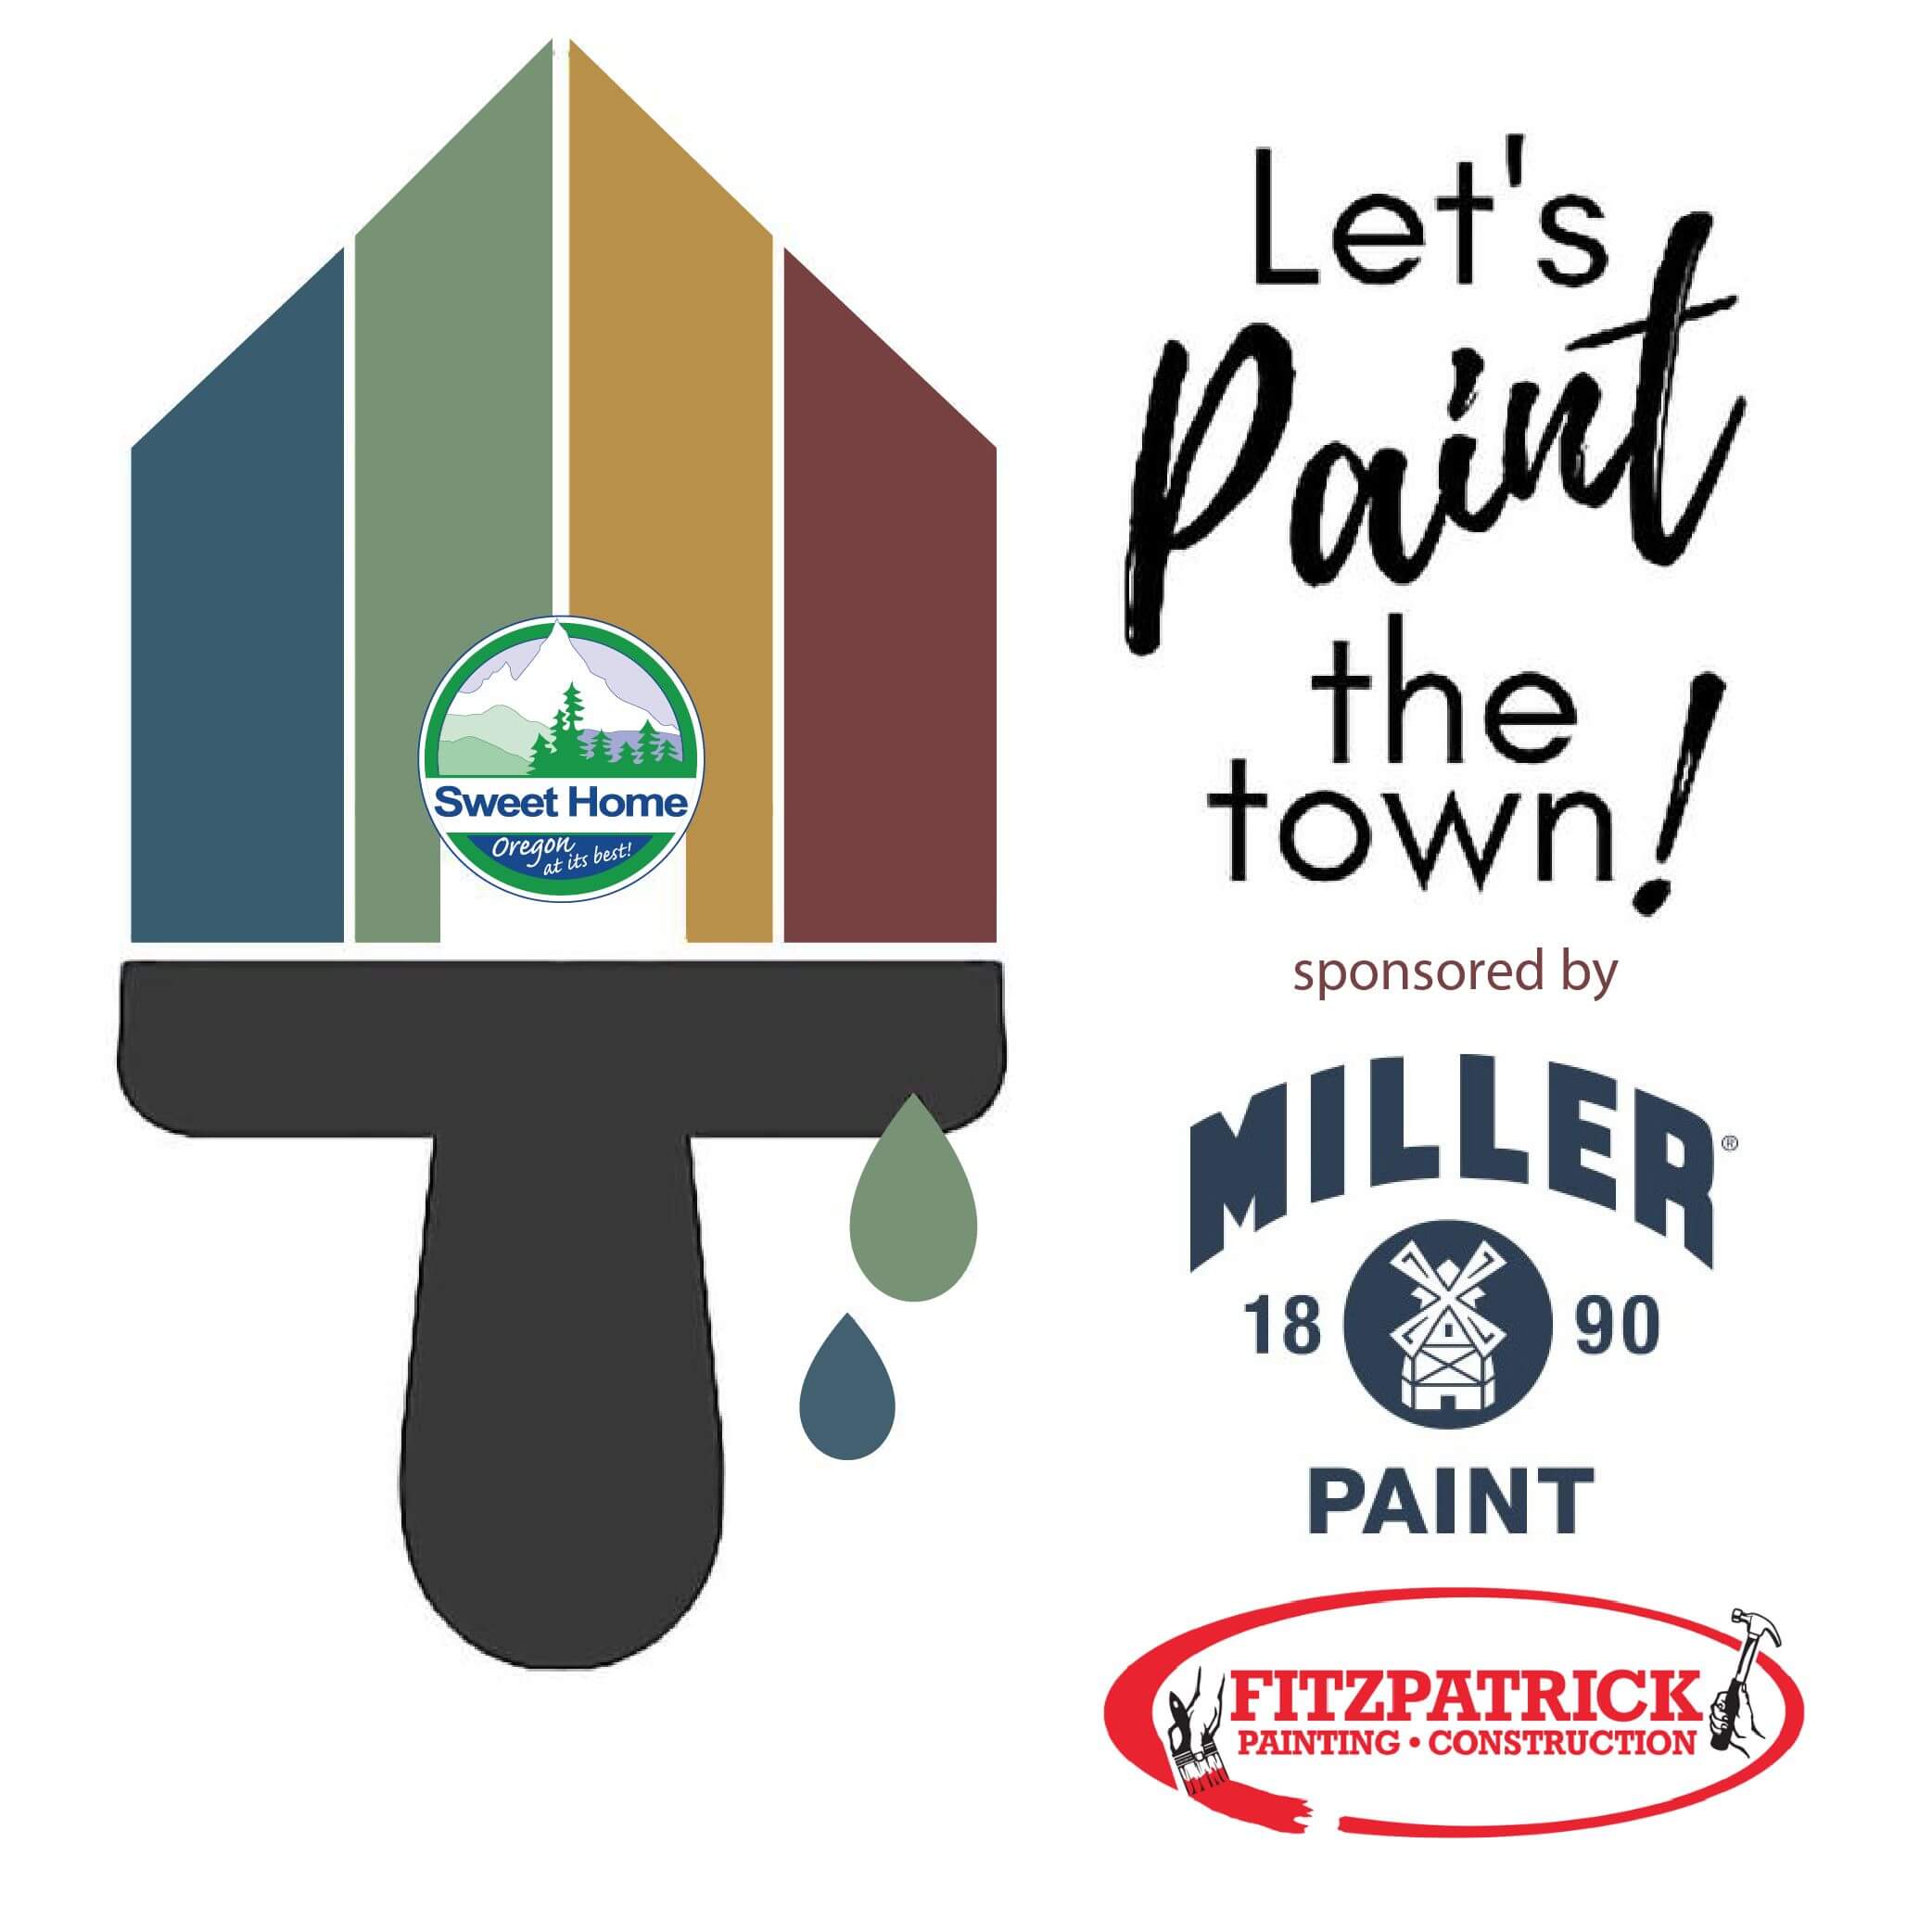 Lets-Paint-the-town-Logo-01-9a7e2693-1144-47ea-9826-99d0288aa613.jpg